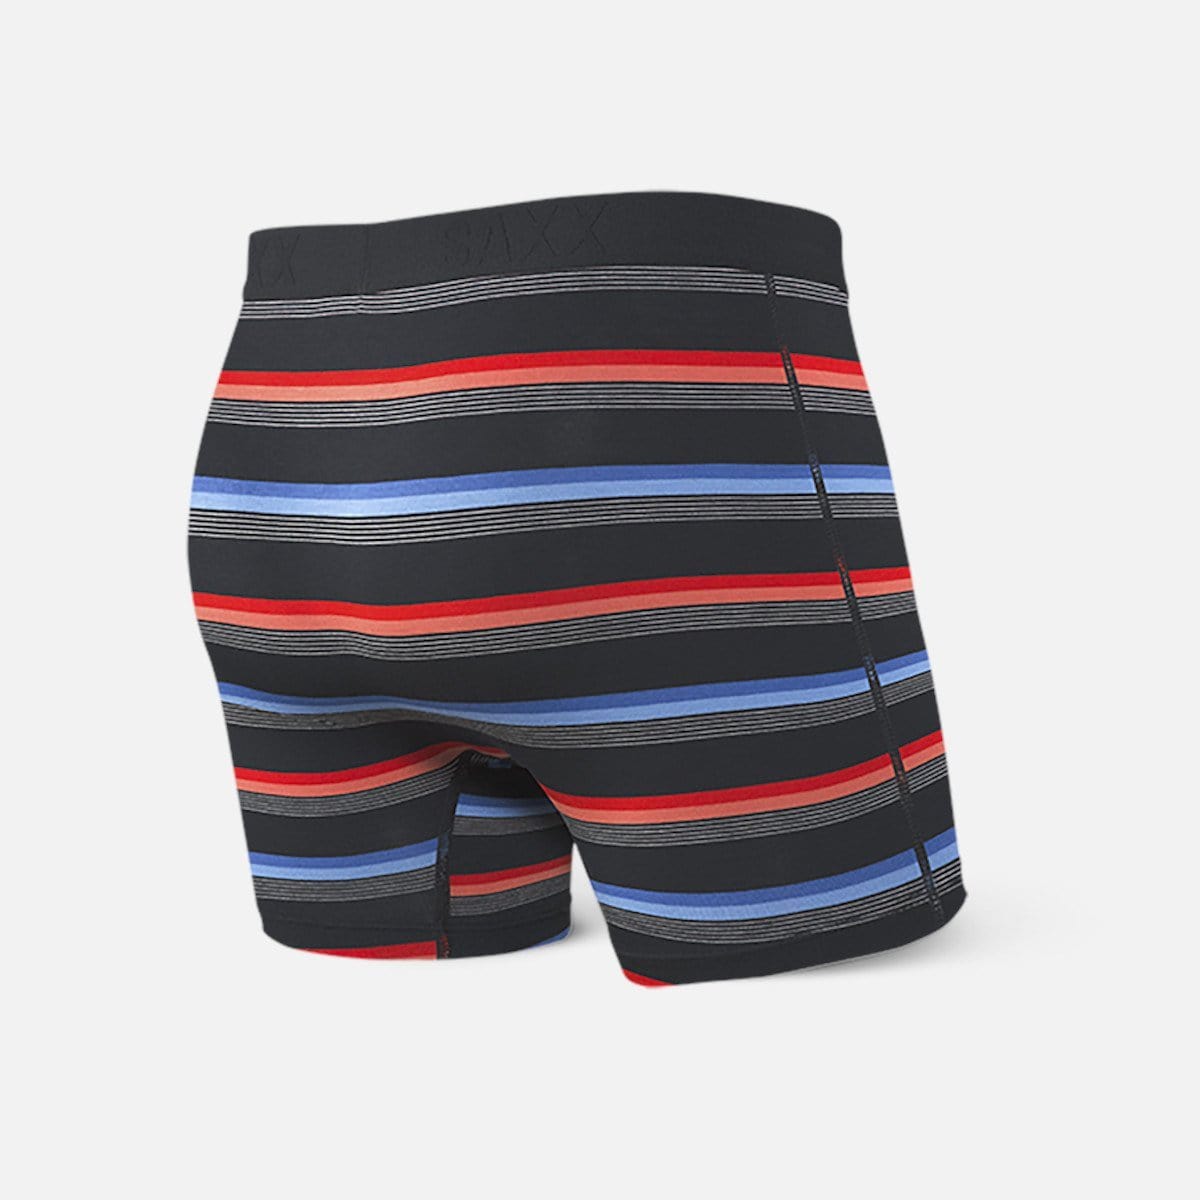 Saxx Ultra Boxers - Black Blurred Stripe